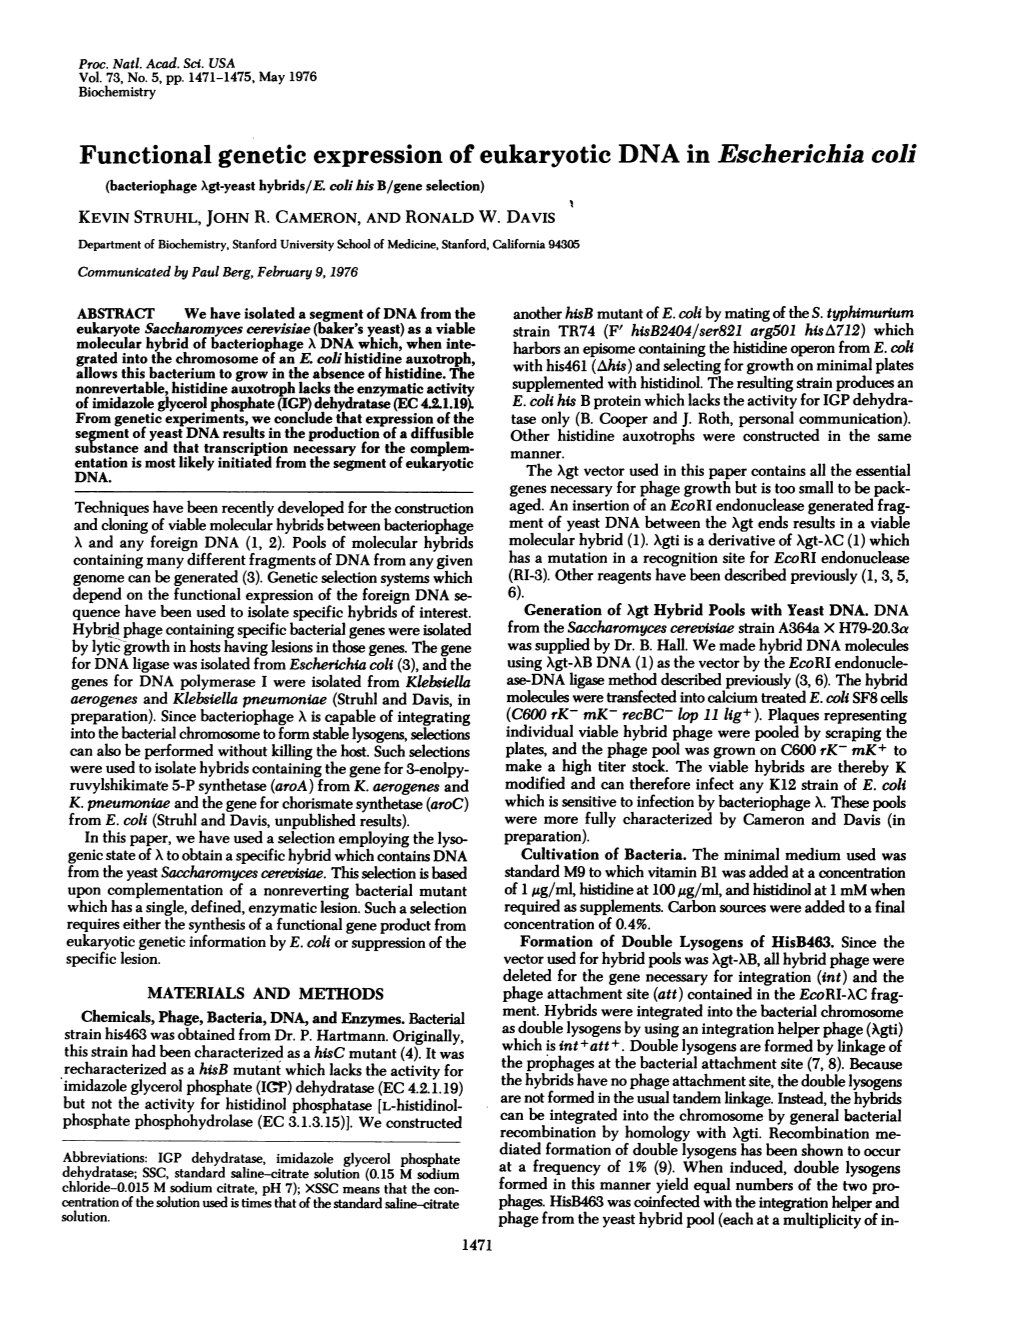 Functional Genetic Expression of Eukaryotic DNA in Escherichia Coli (Bacteriophage Xgt-Yeast Hybrids/E